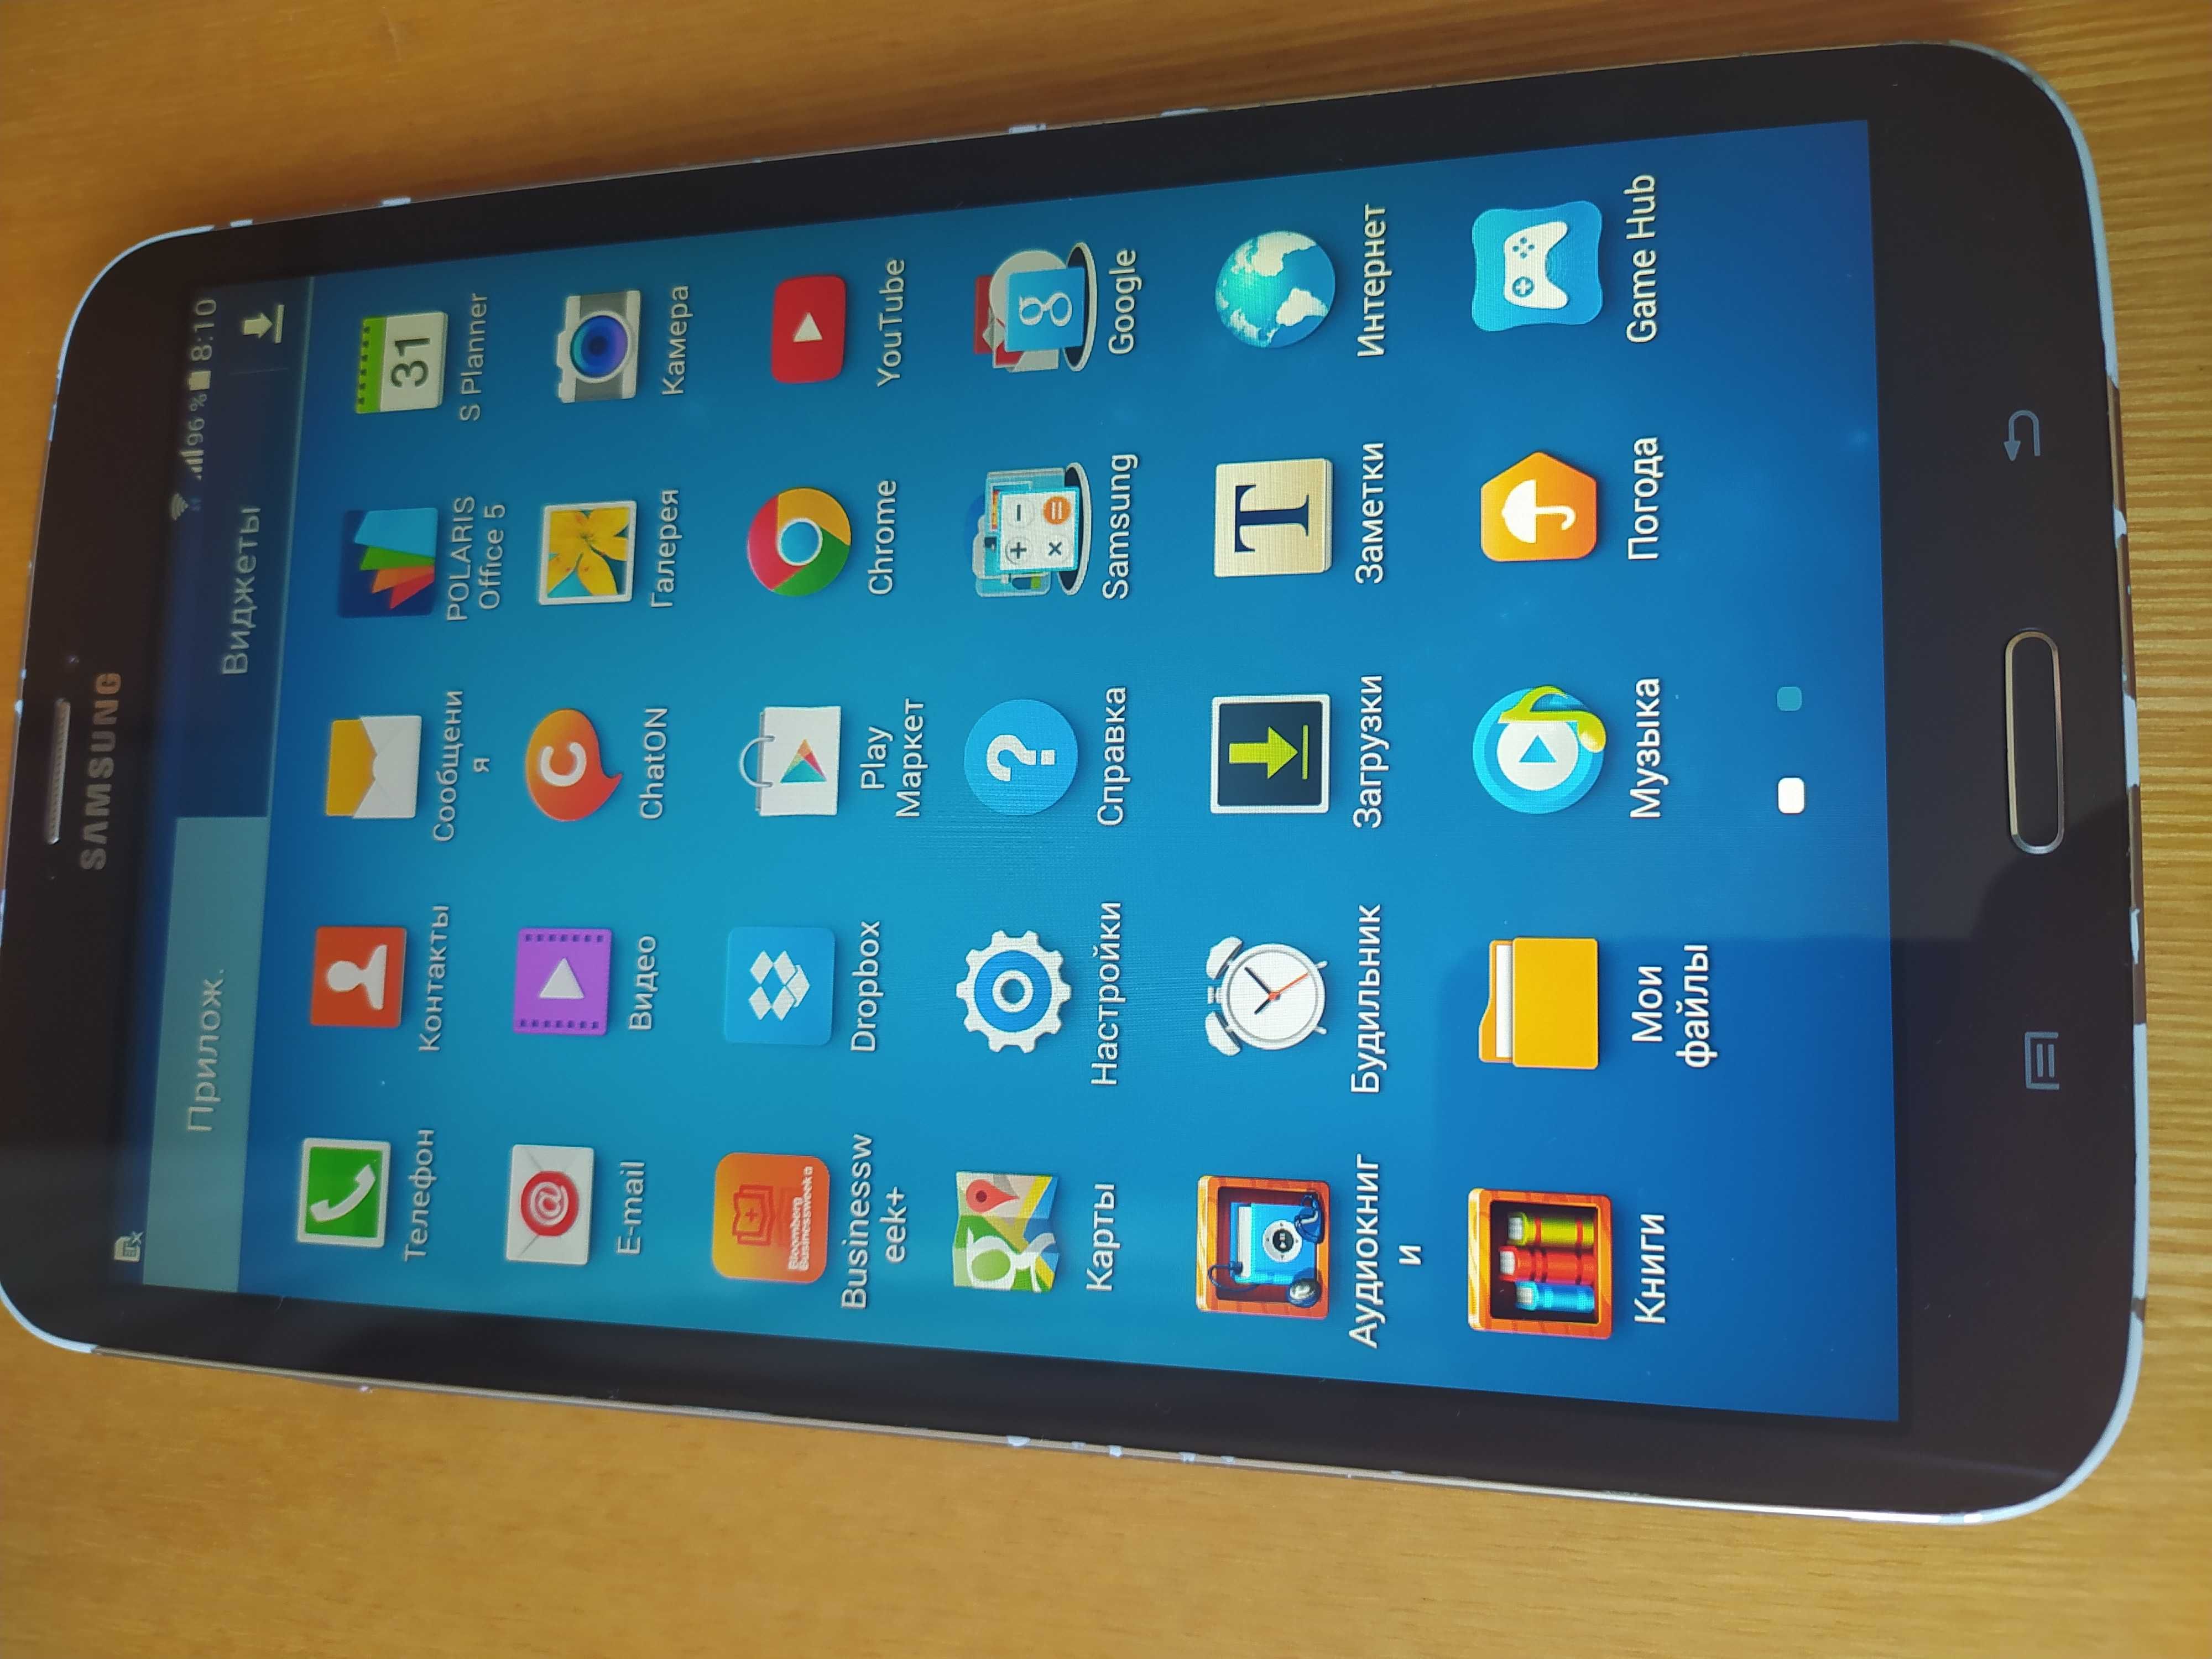 Планшет Samsung Galaxy Tab 3 SM-T311 8.0 16GB 3G Sim сим